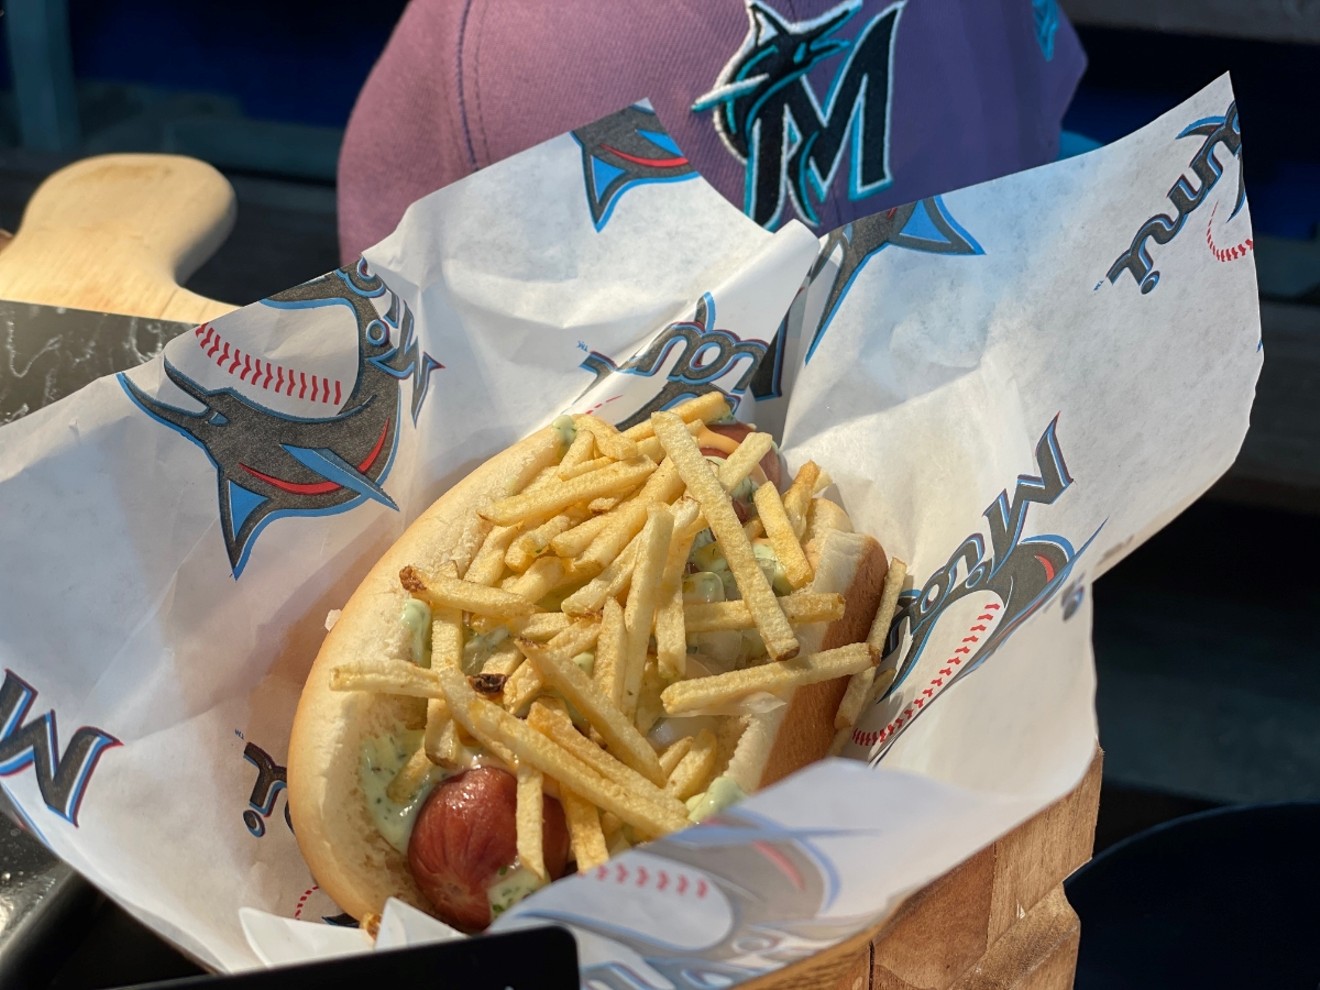 The hot dog completa puts a Miami twist on a ballpark classic.